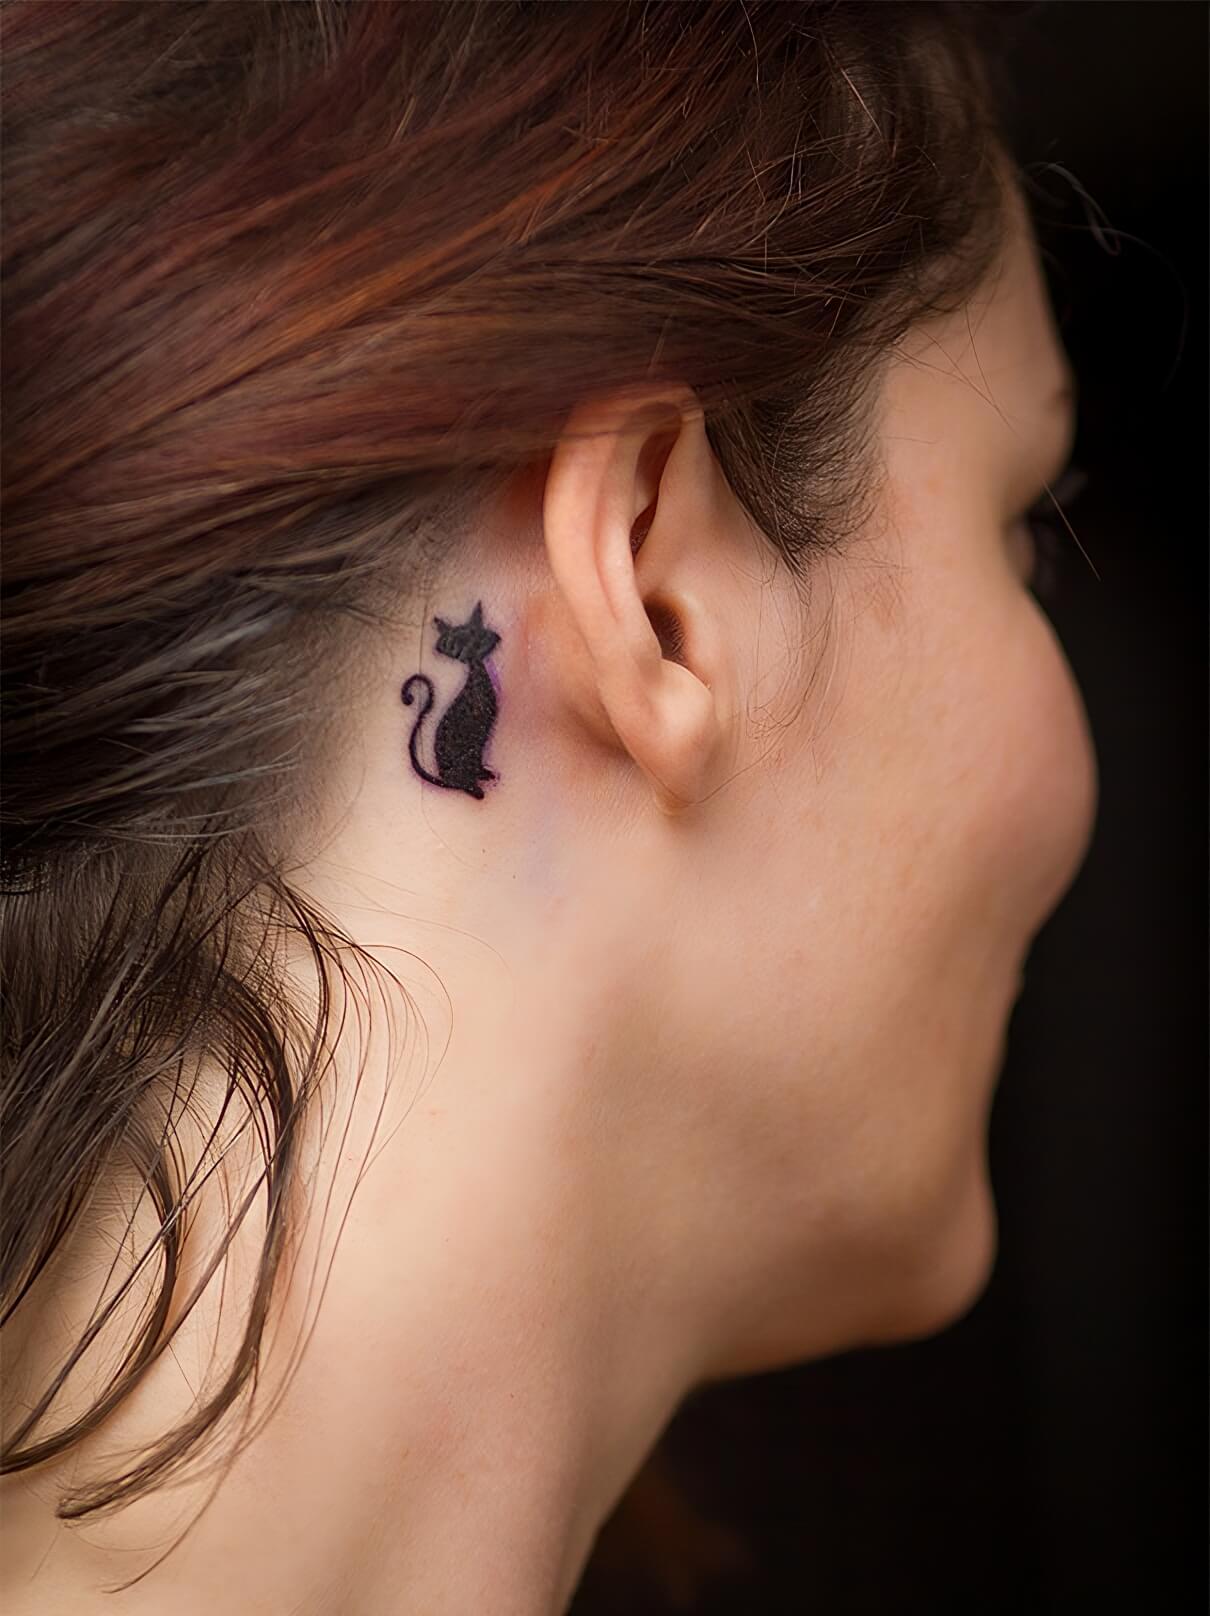 Mini Cat Tattoos Behind The Ear